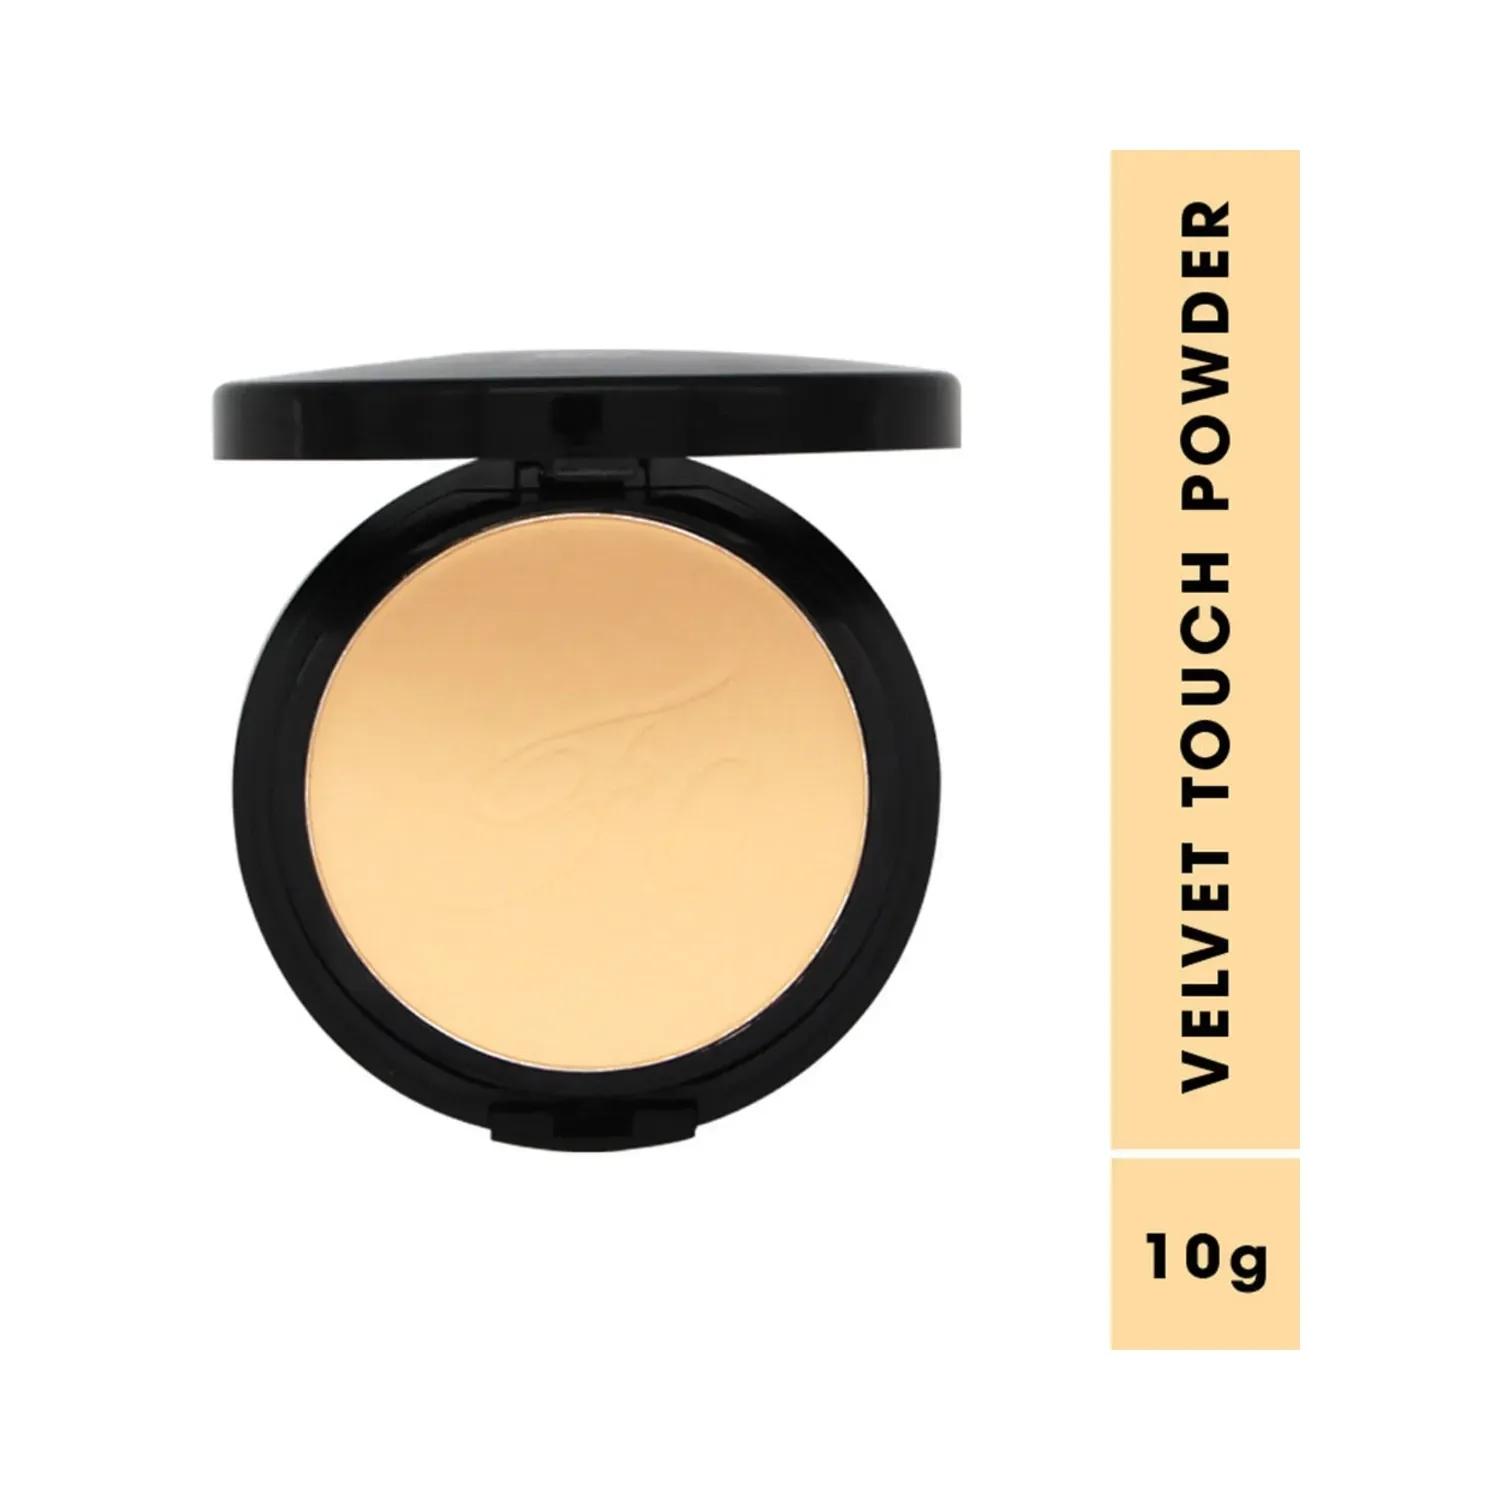 fashion colour velvet touch compact face powder - 01 shade (10g)